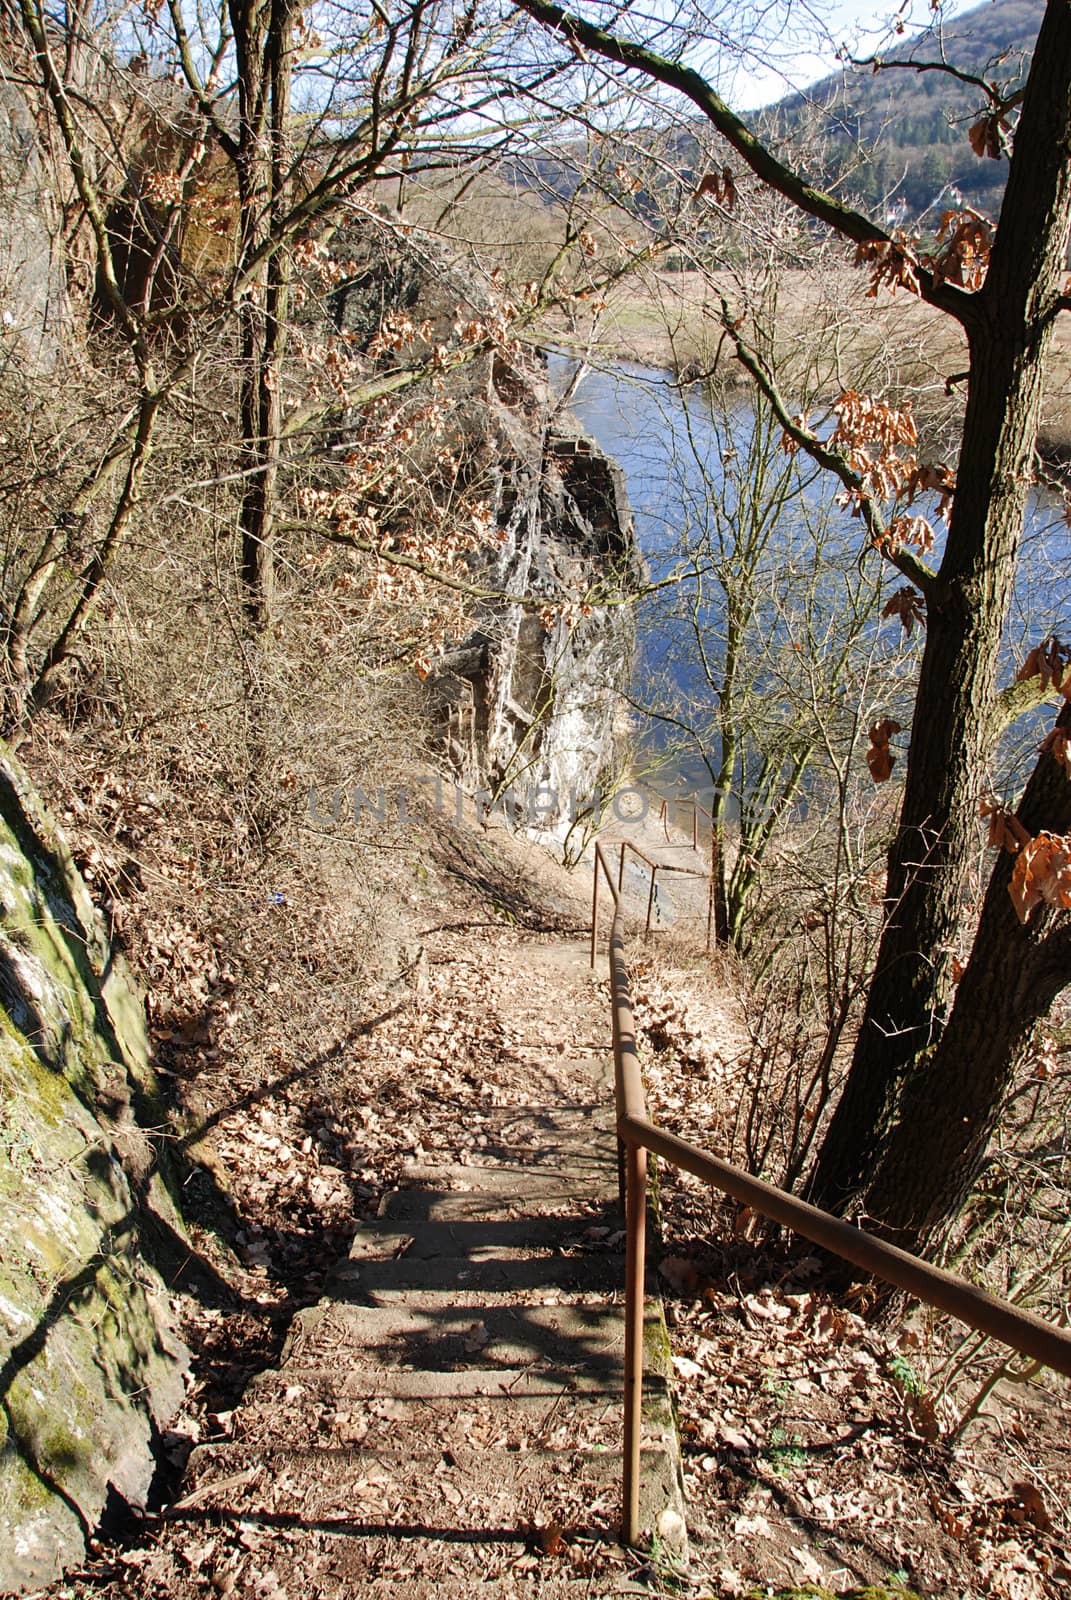 Narrow stair path leads through the wild rock